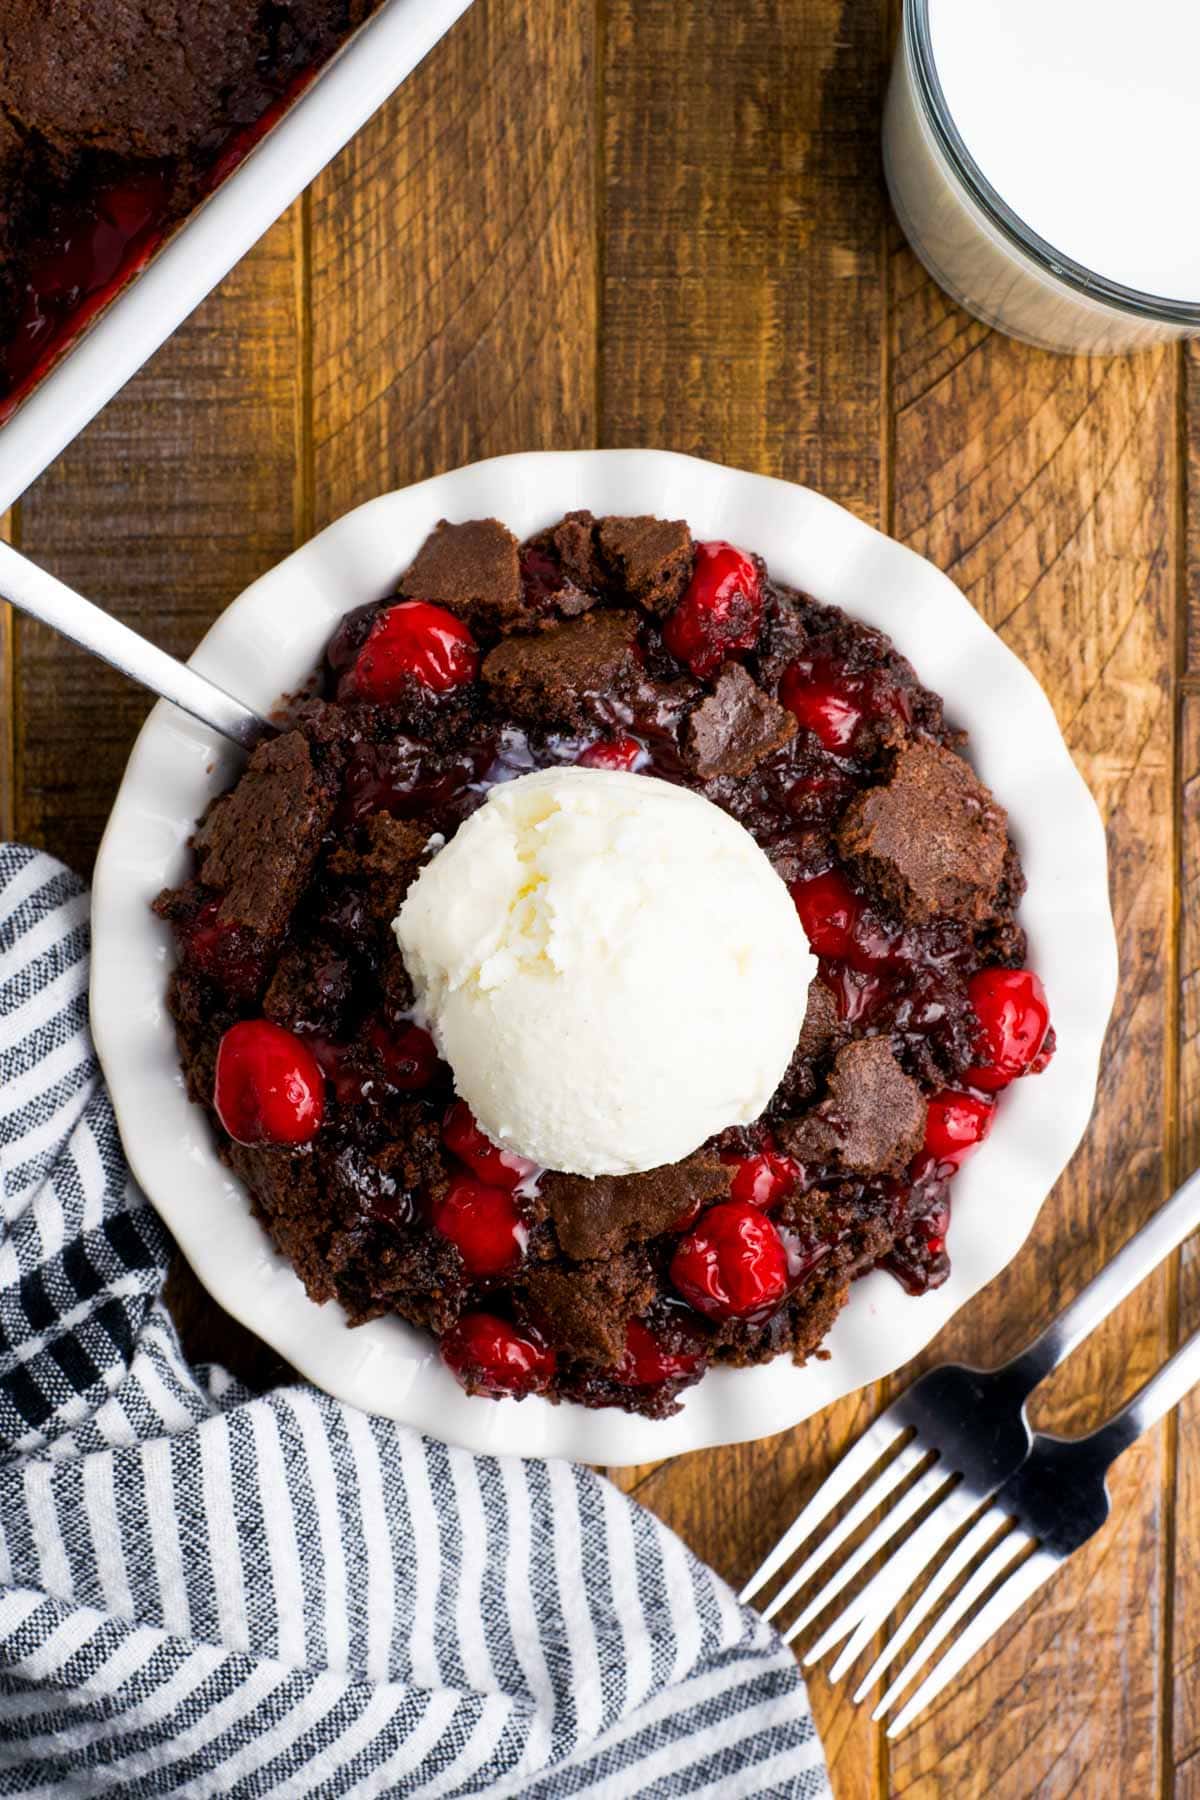 Chocolate cherry dump cake with vanilla ice cream and a spoon.